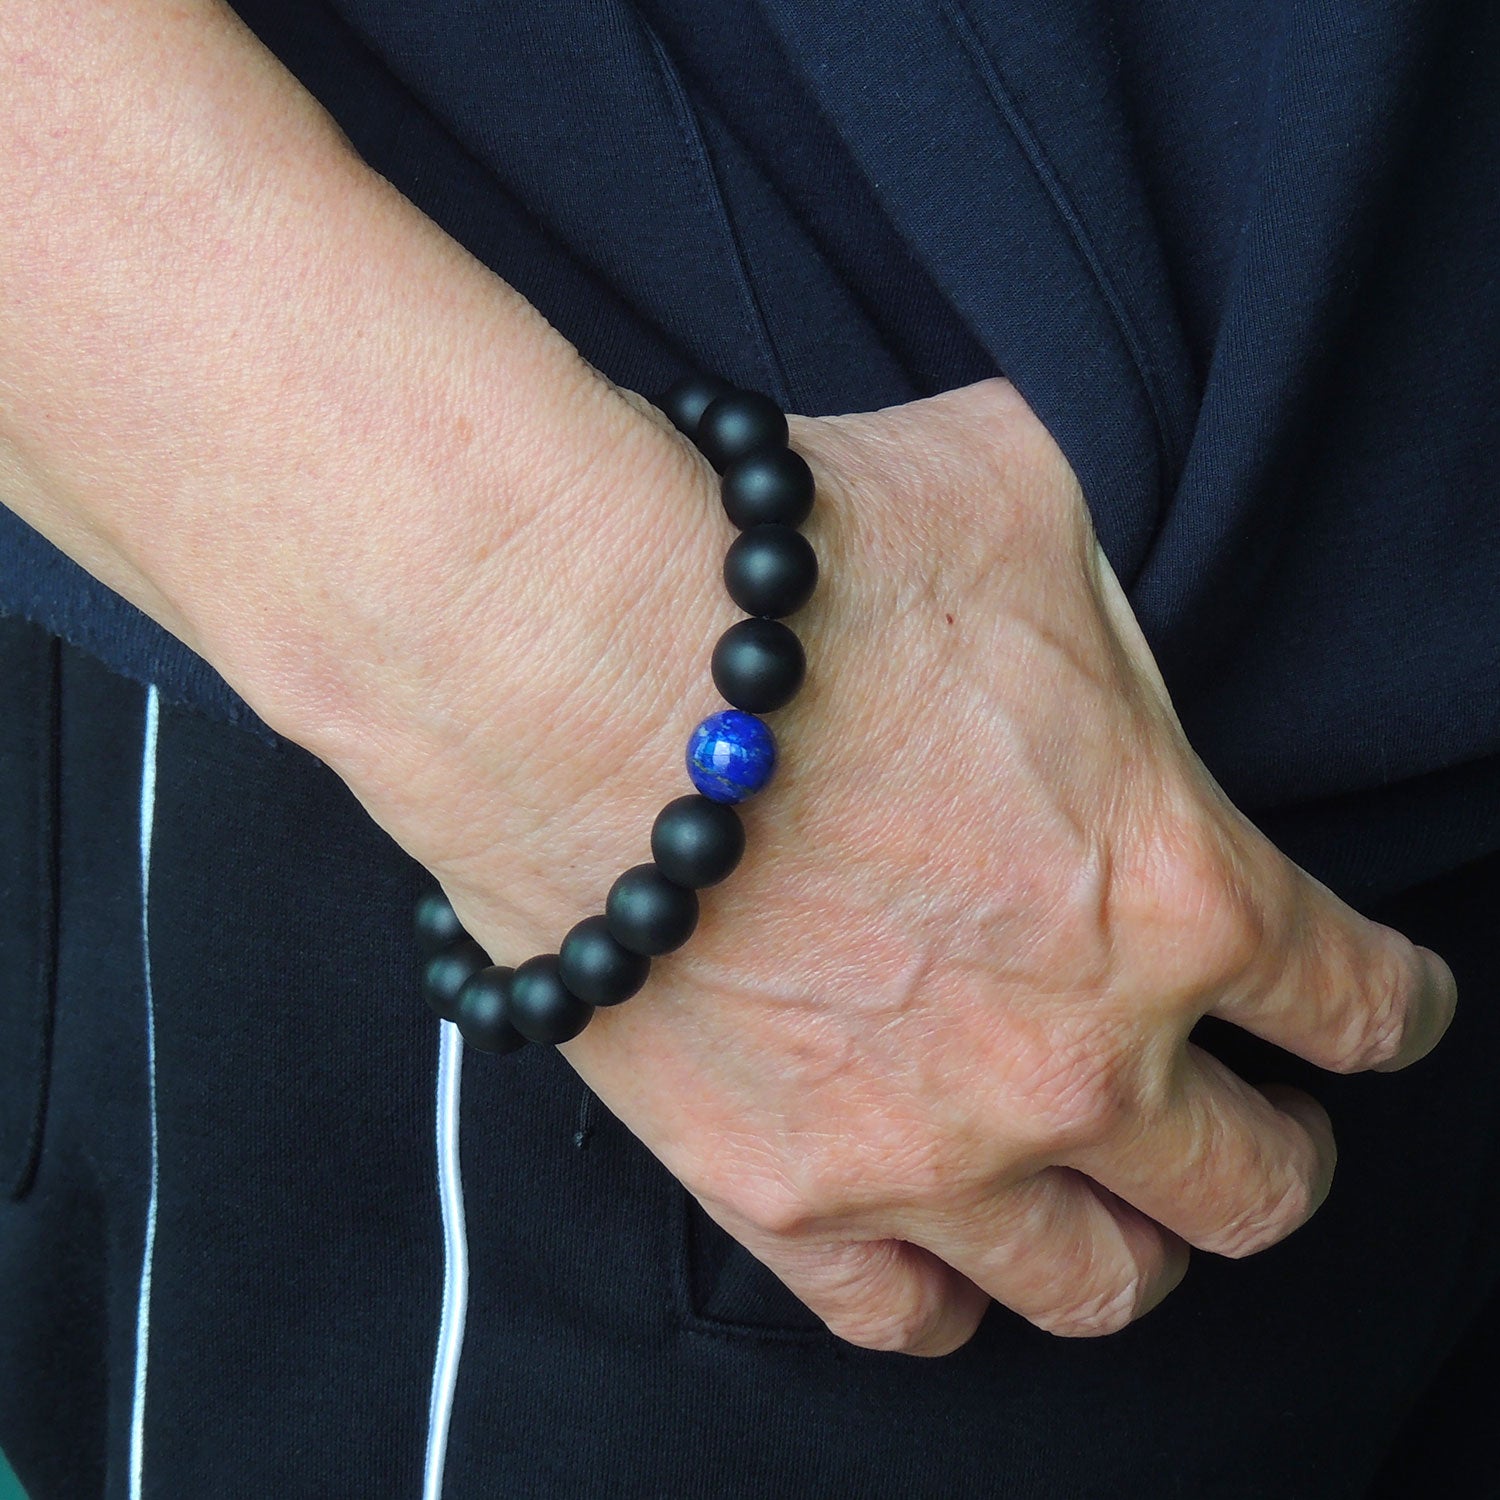 Handmade Adjustable Braided Bracelet - Men's Women's Custom Jewelry, Protection, Compassion with 10mm Lapis Lazuli, Matte Black Onyx Healing Gemstones BR1823